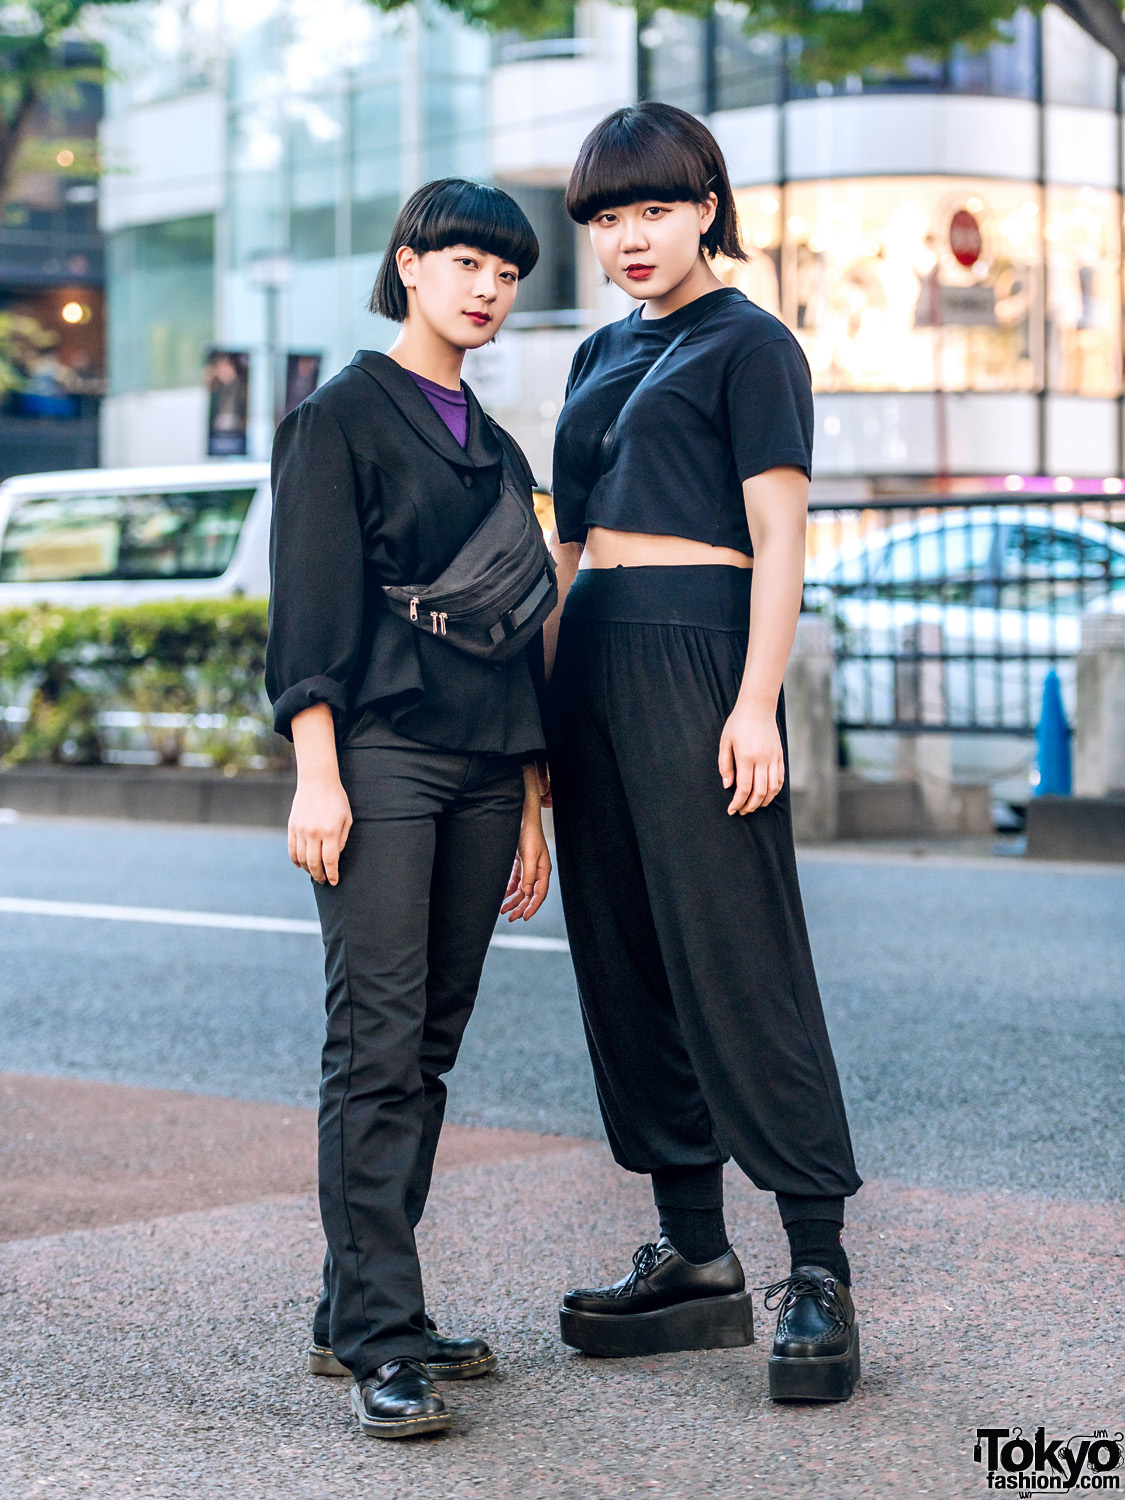 All Minimalist Streetwear Styles w/ Plaza South, Dickies, Dr. Martens, UNIQLO & Yosuke Creepers – Tokyo Fashion